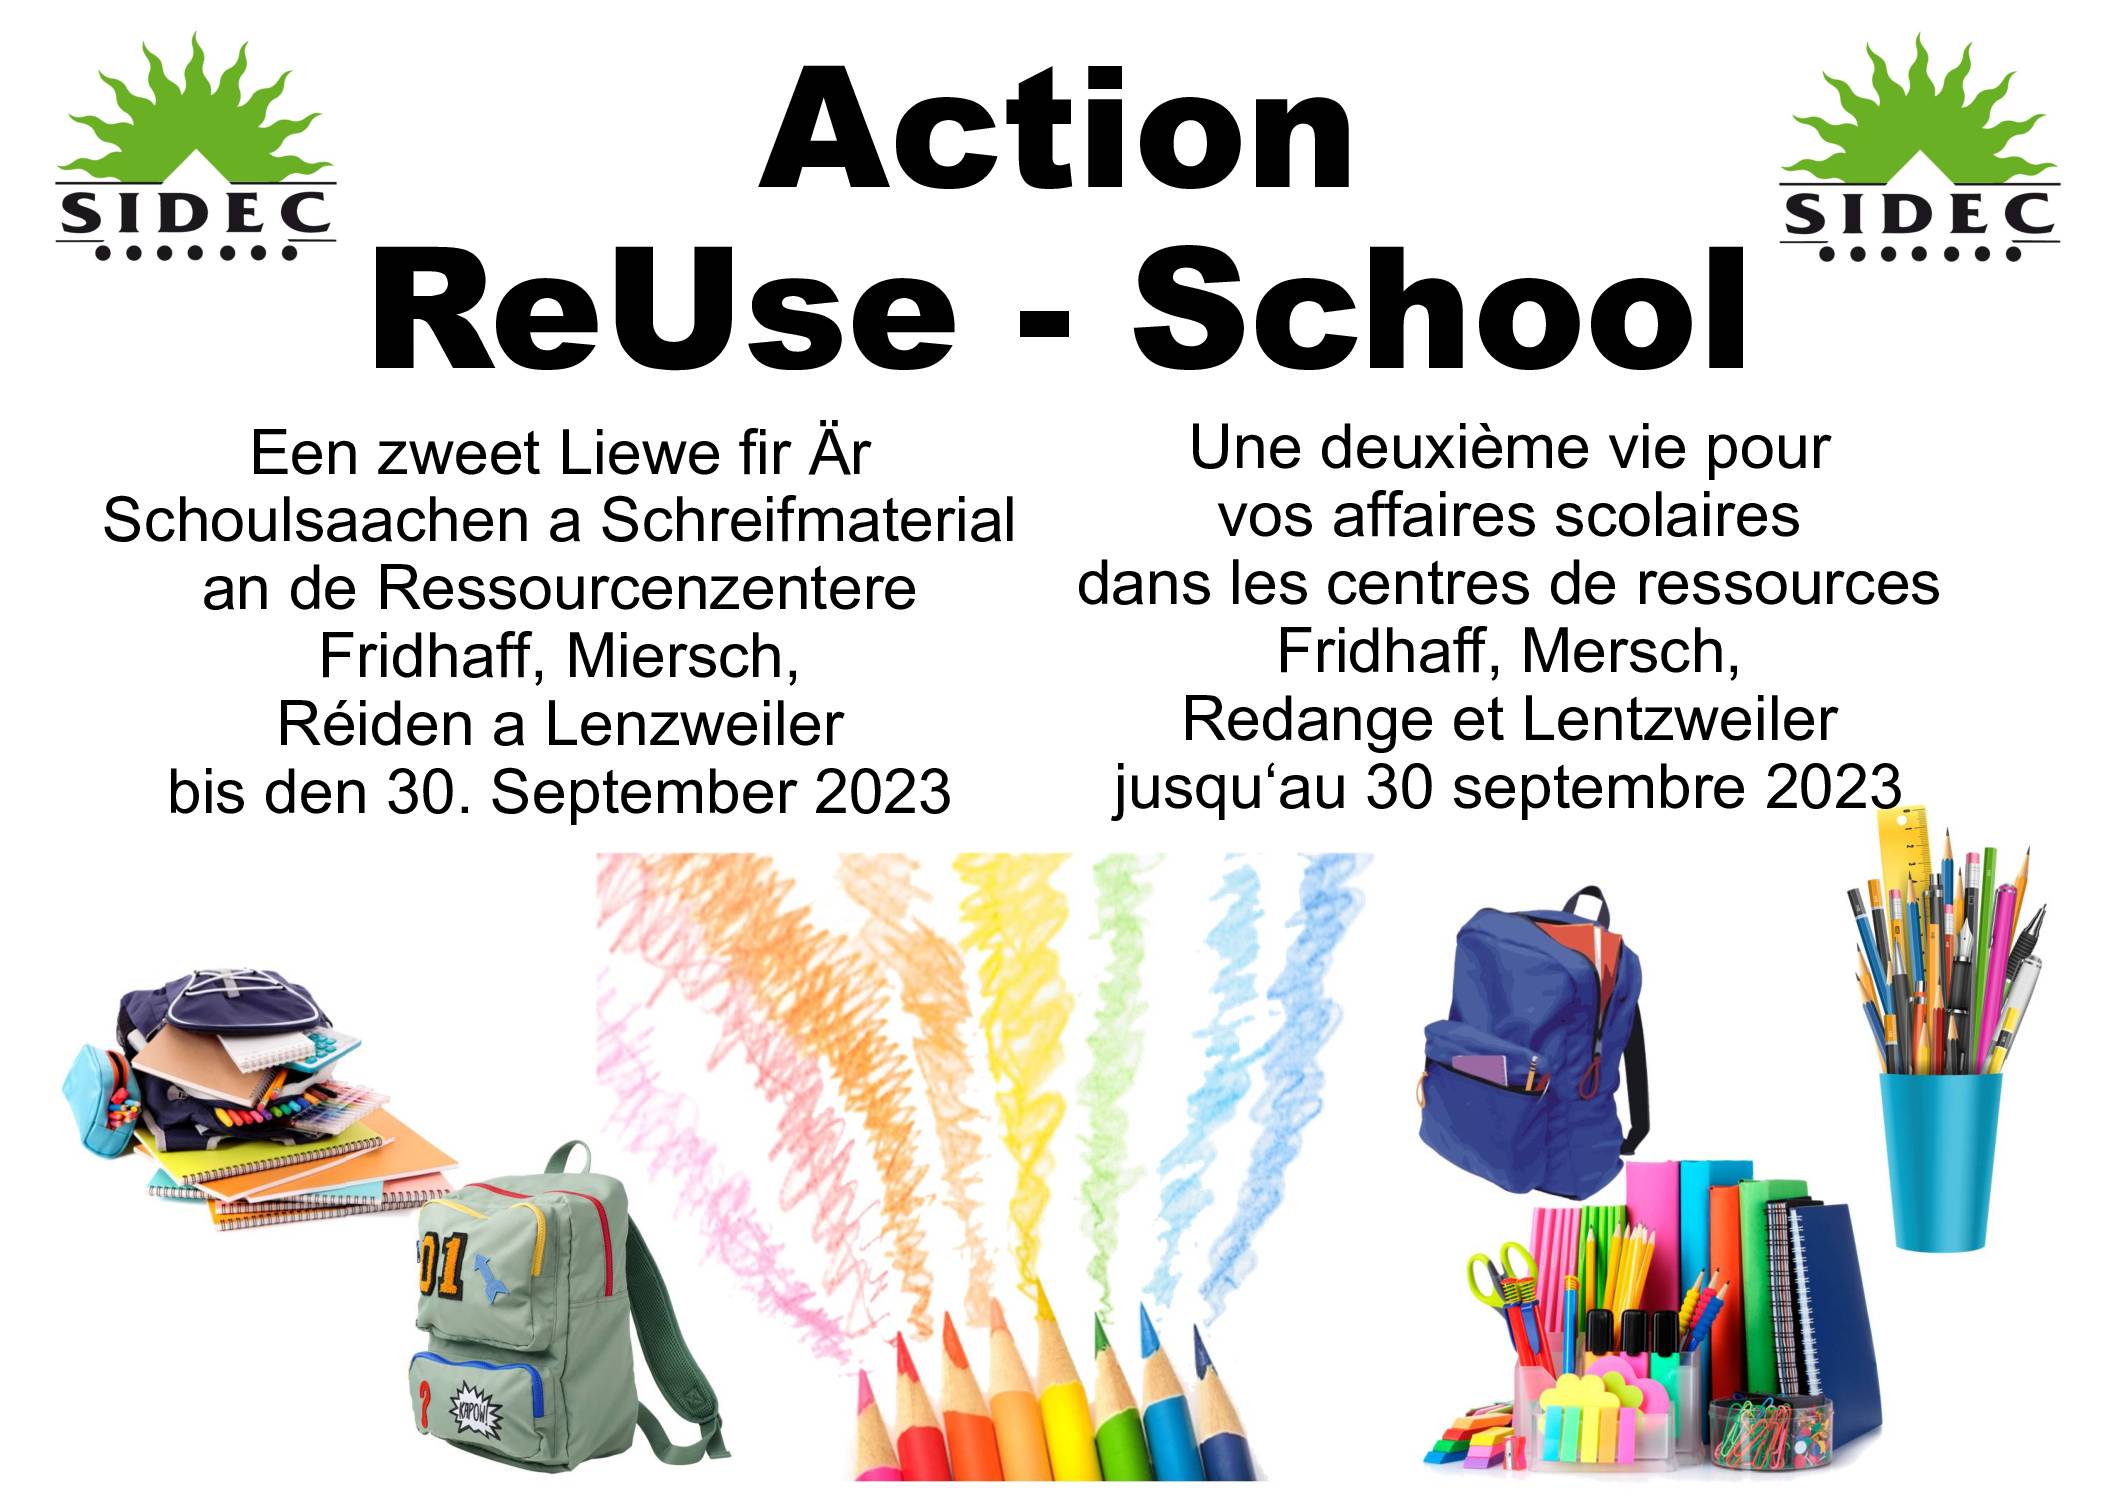 Action ReUse – School du SIDEC